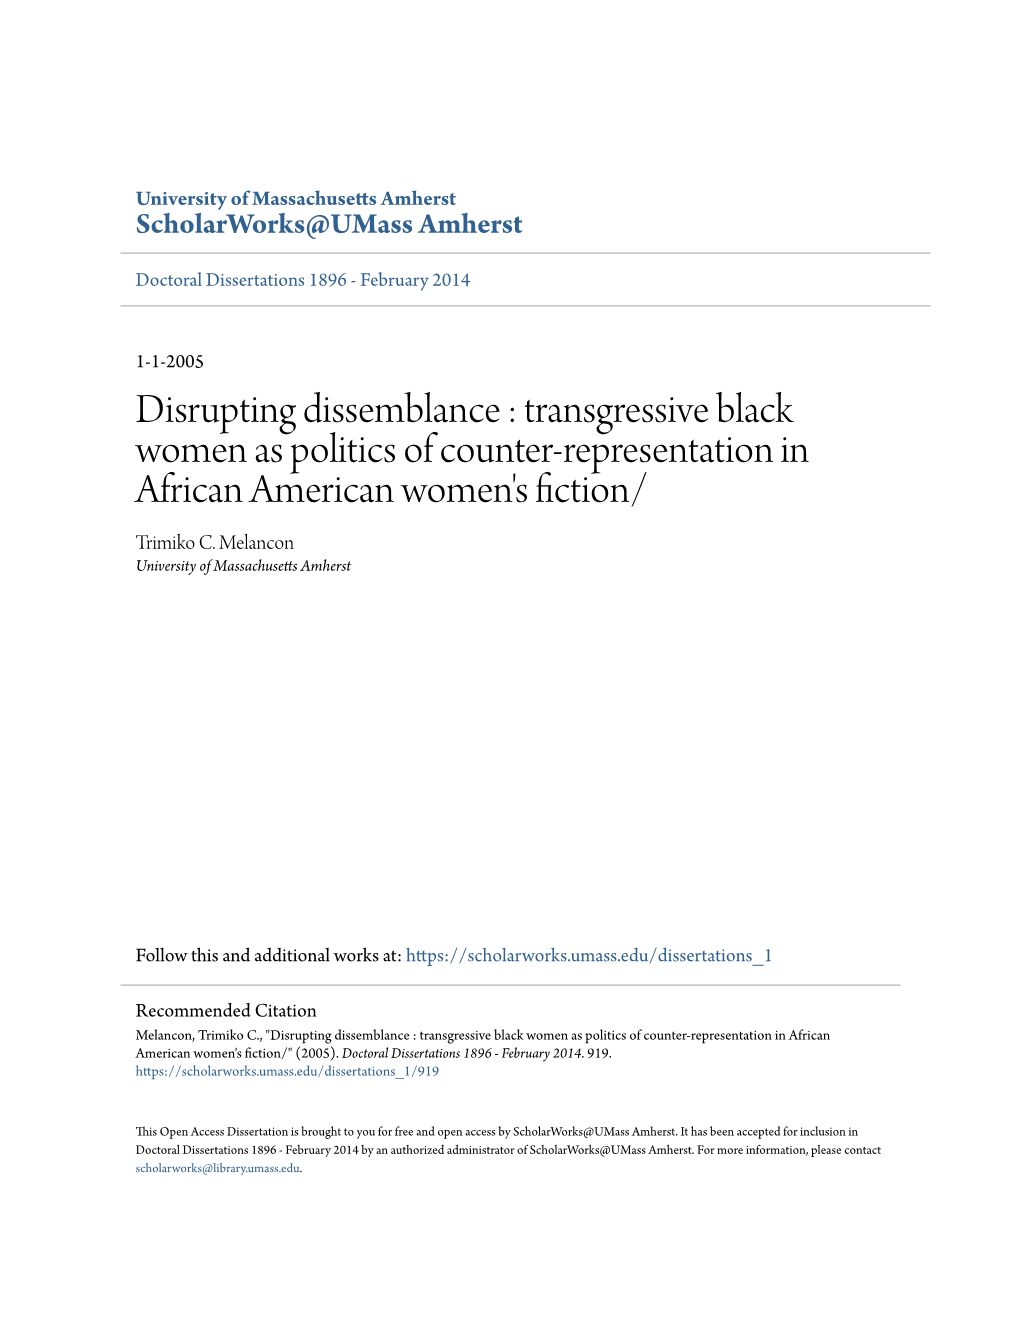 Disrupting Dissemblance : Transgressive Black Women As Politics of Counter-Representation in African American Women's Fiction/ Trimiko C